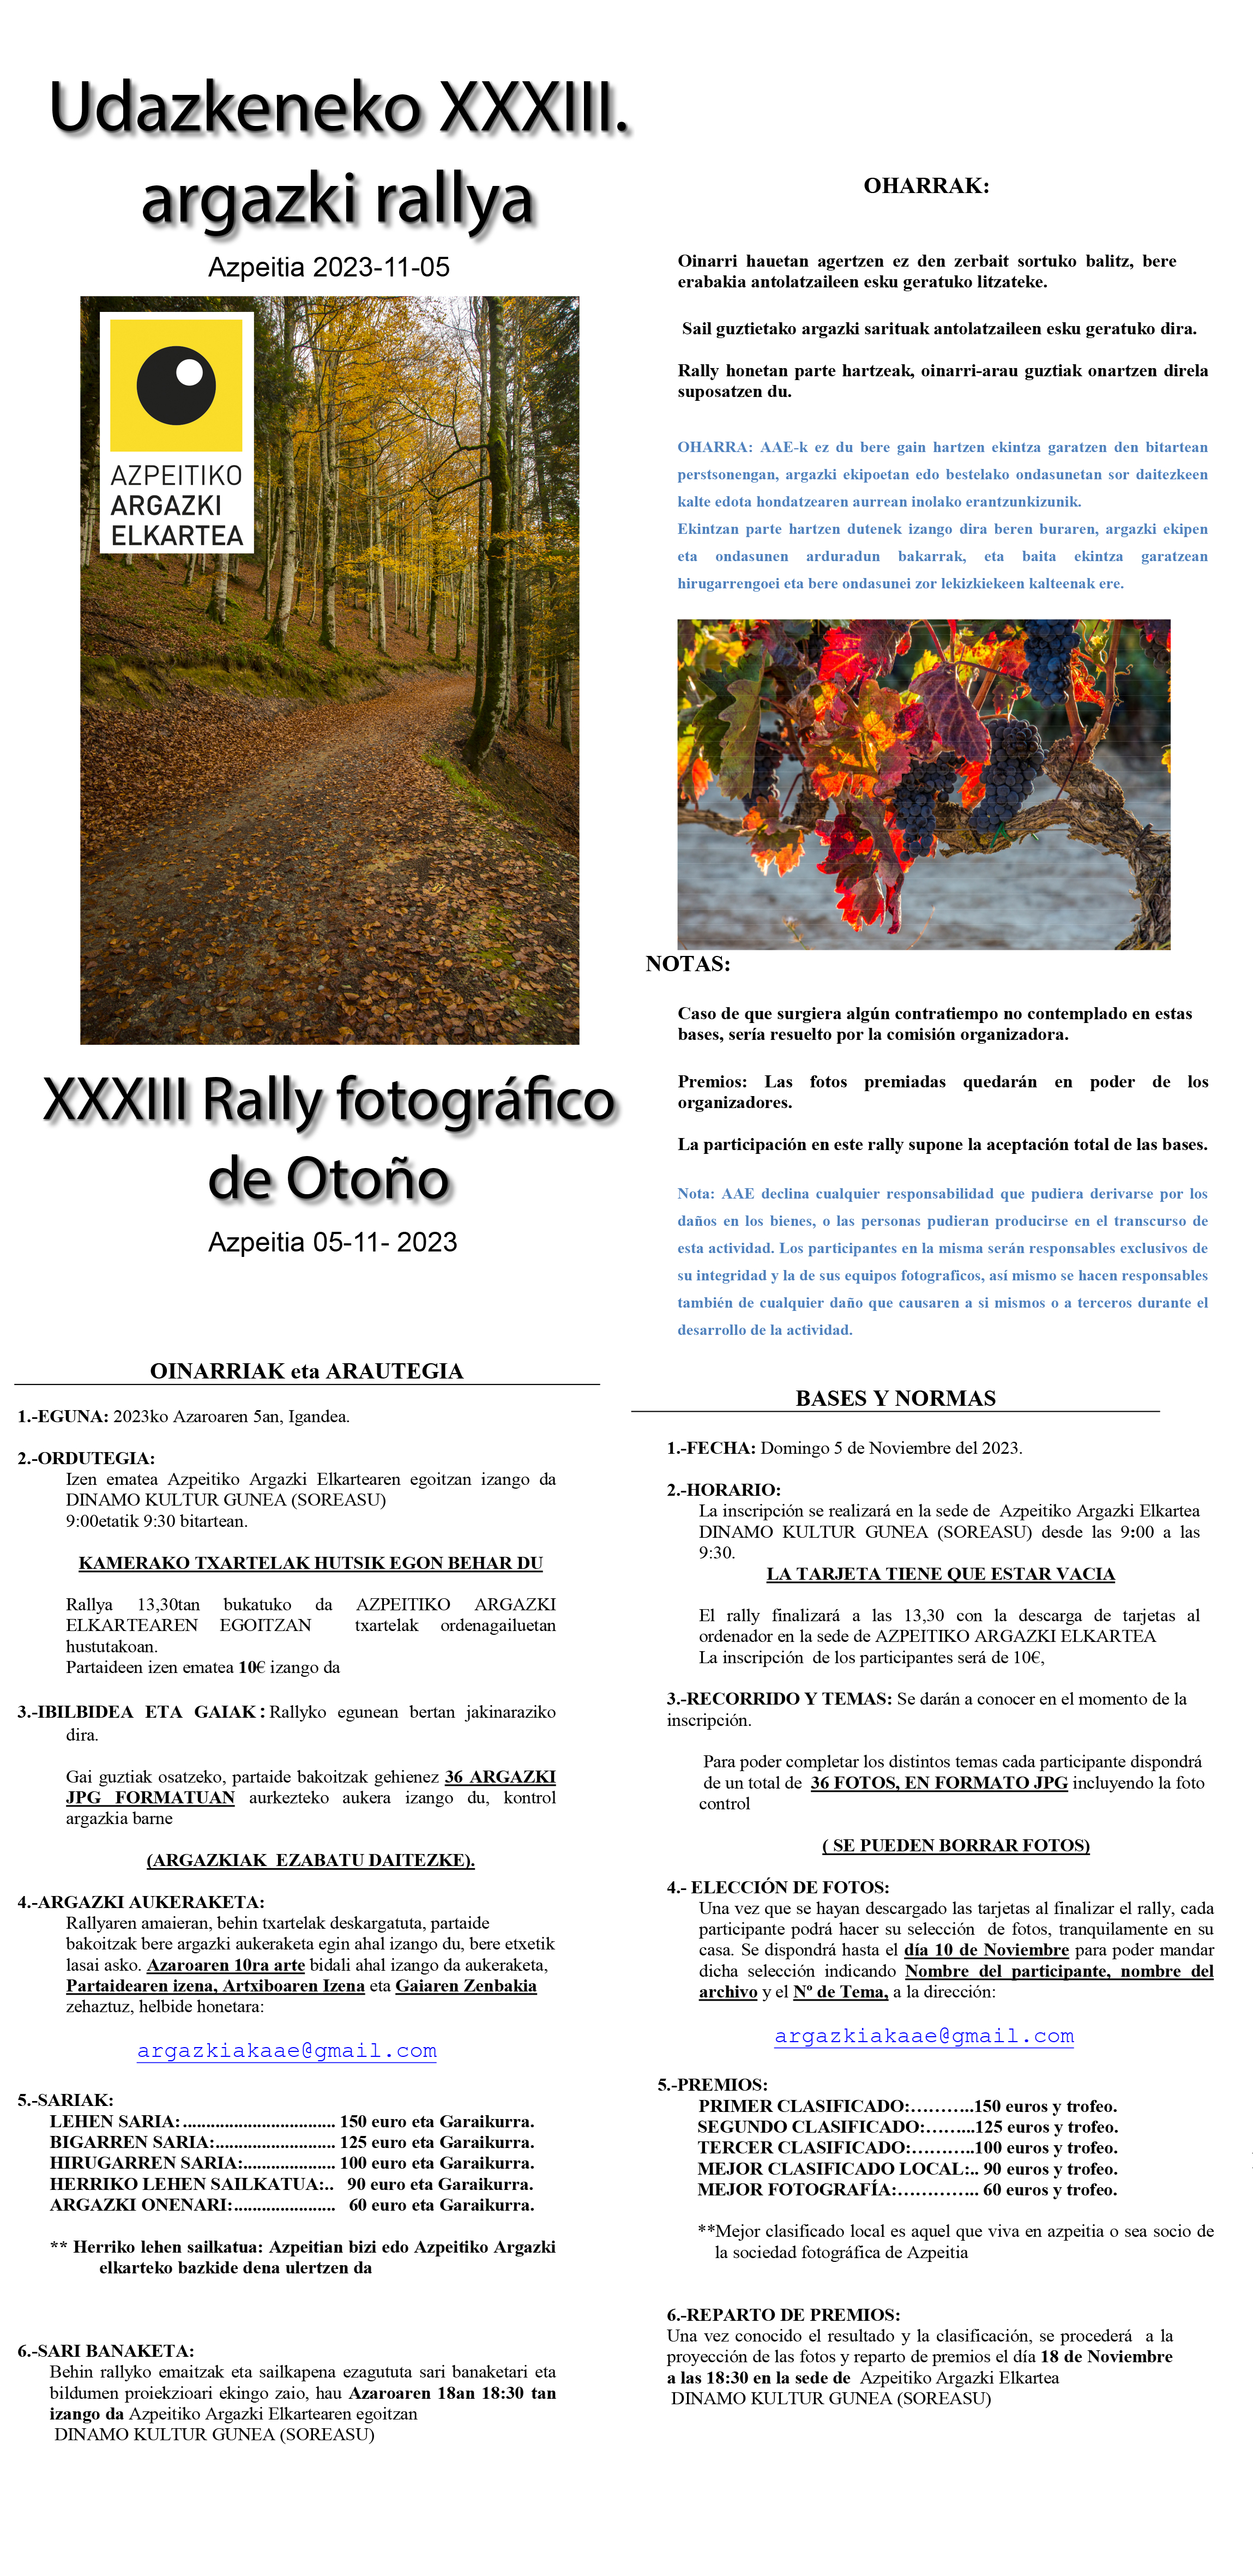 Ven a participar al XXXIII Rally fotográfico de otoño de Azpeitia organizado por Azpeitiko Argazki Elkartea, el 5 de noviembre de 2023